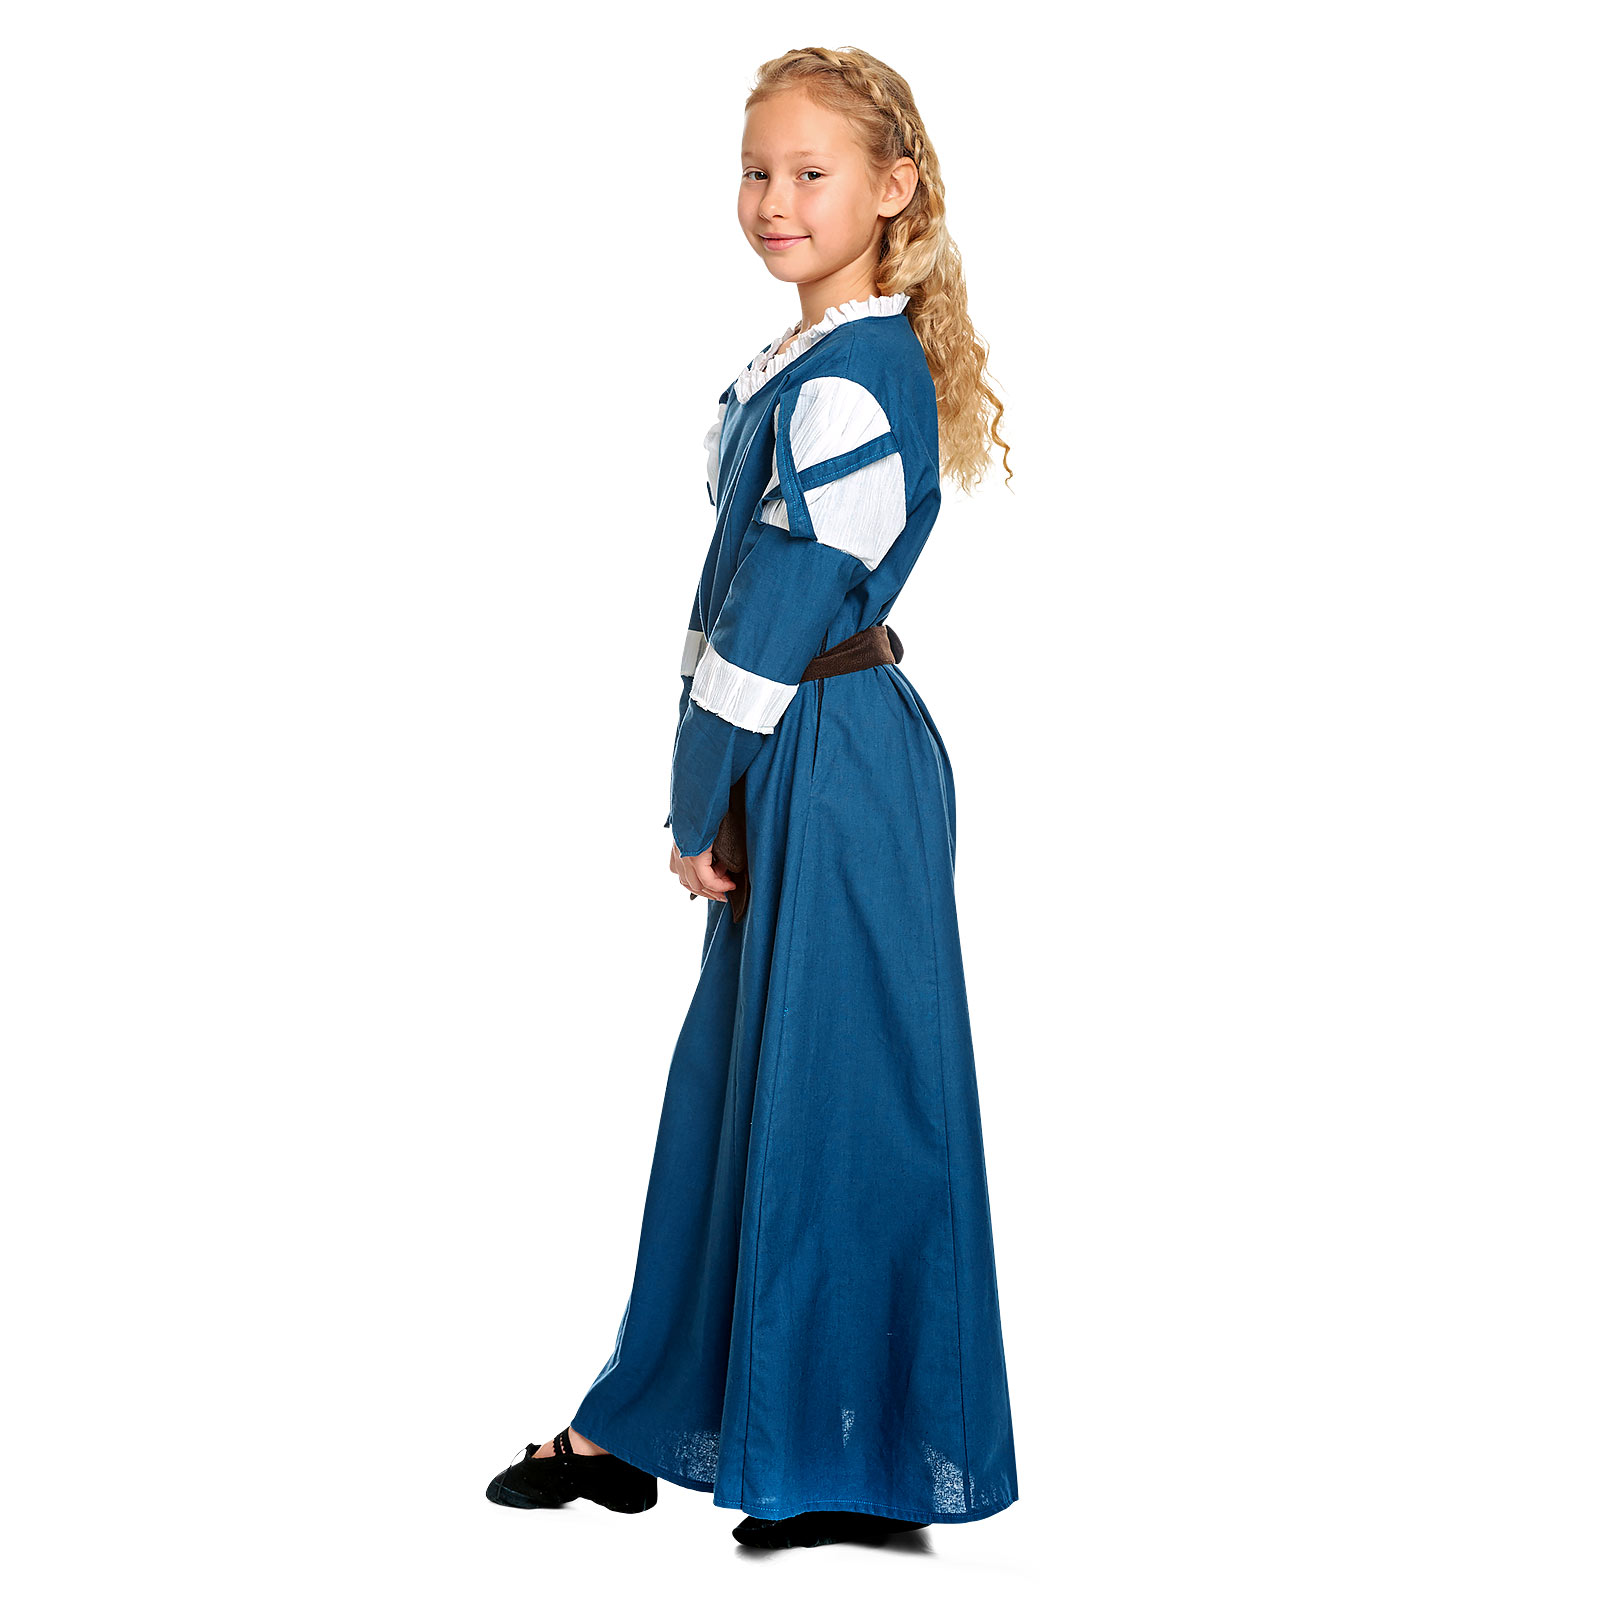 Castle Maiden - Children's Costume